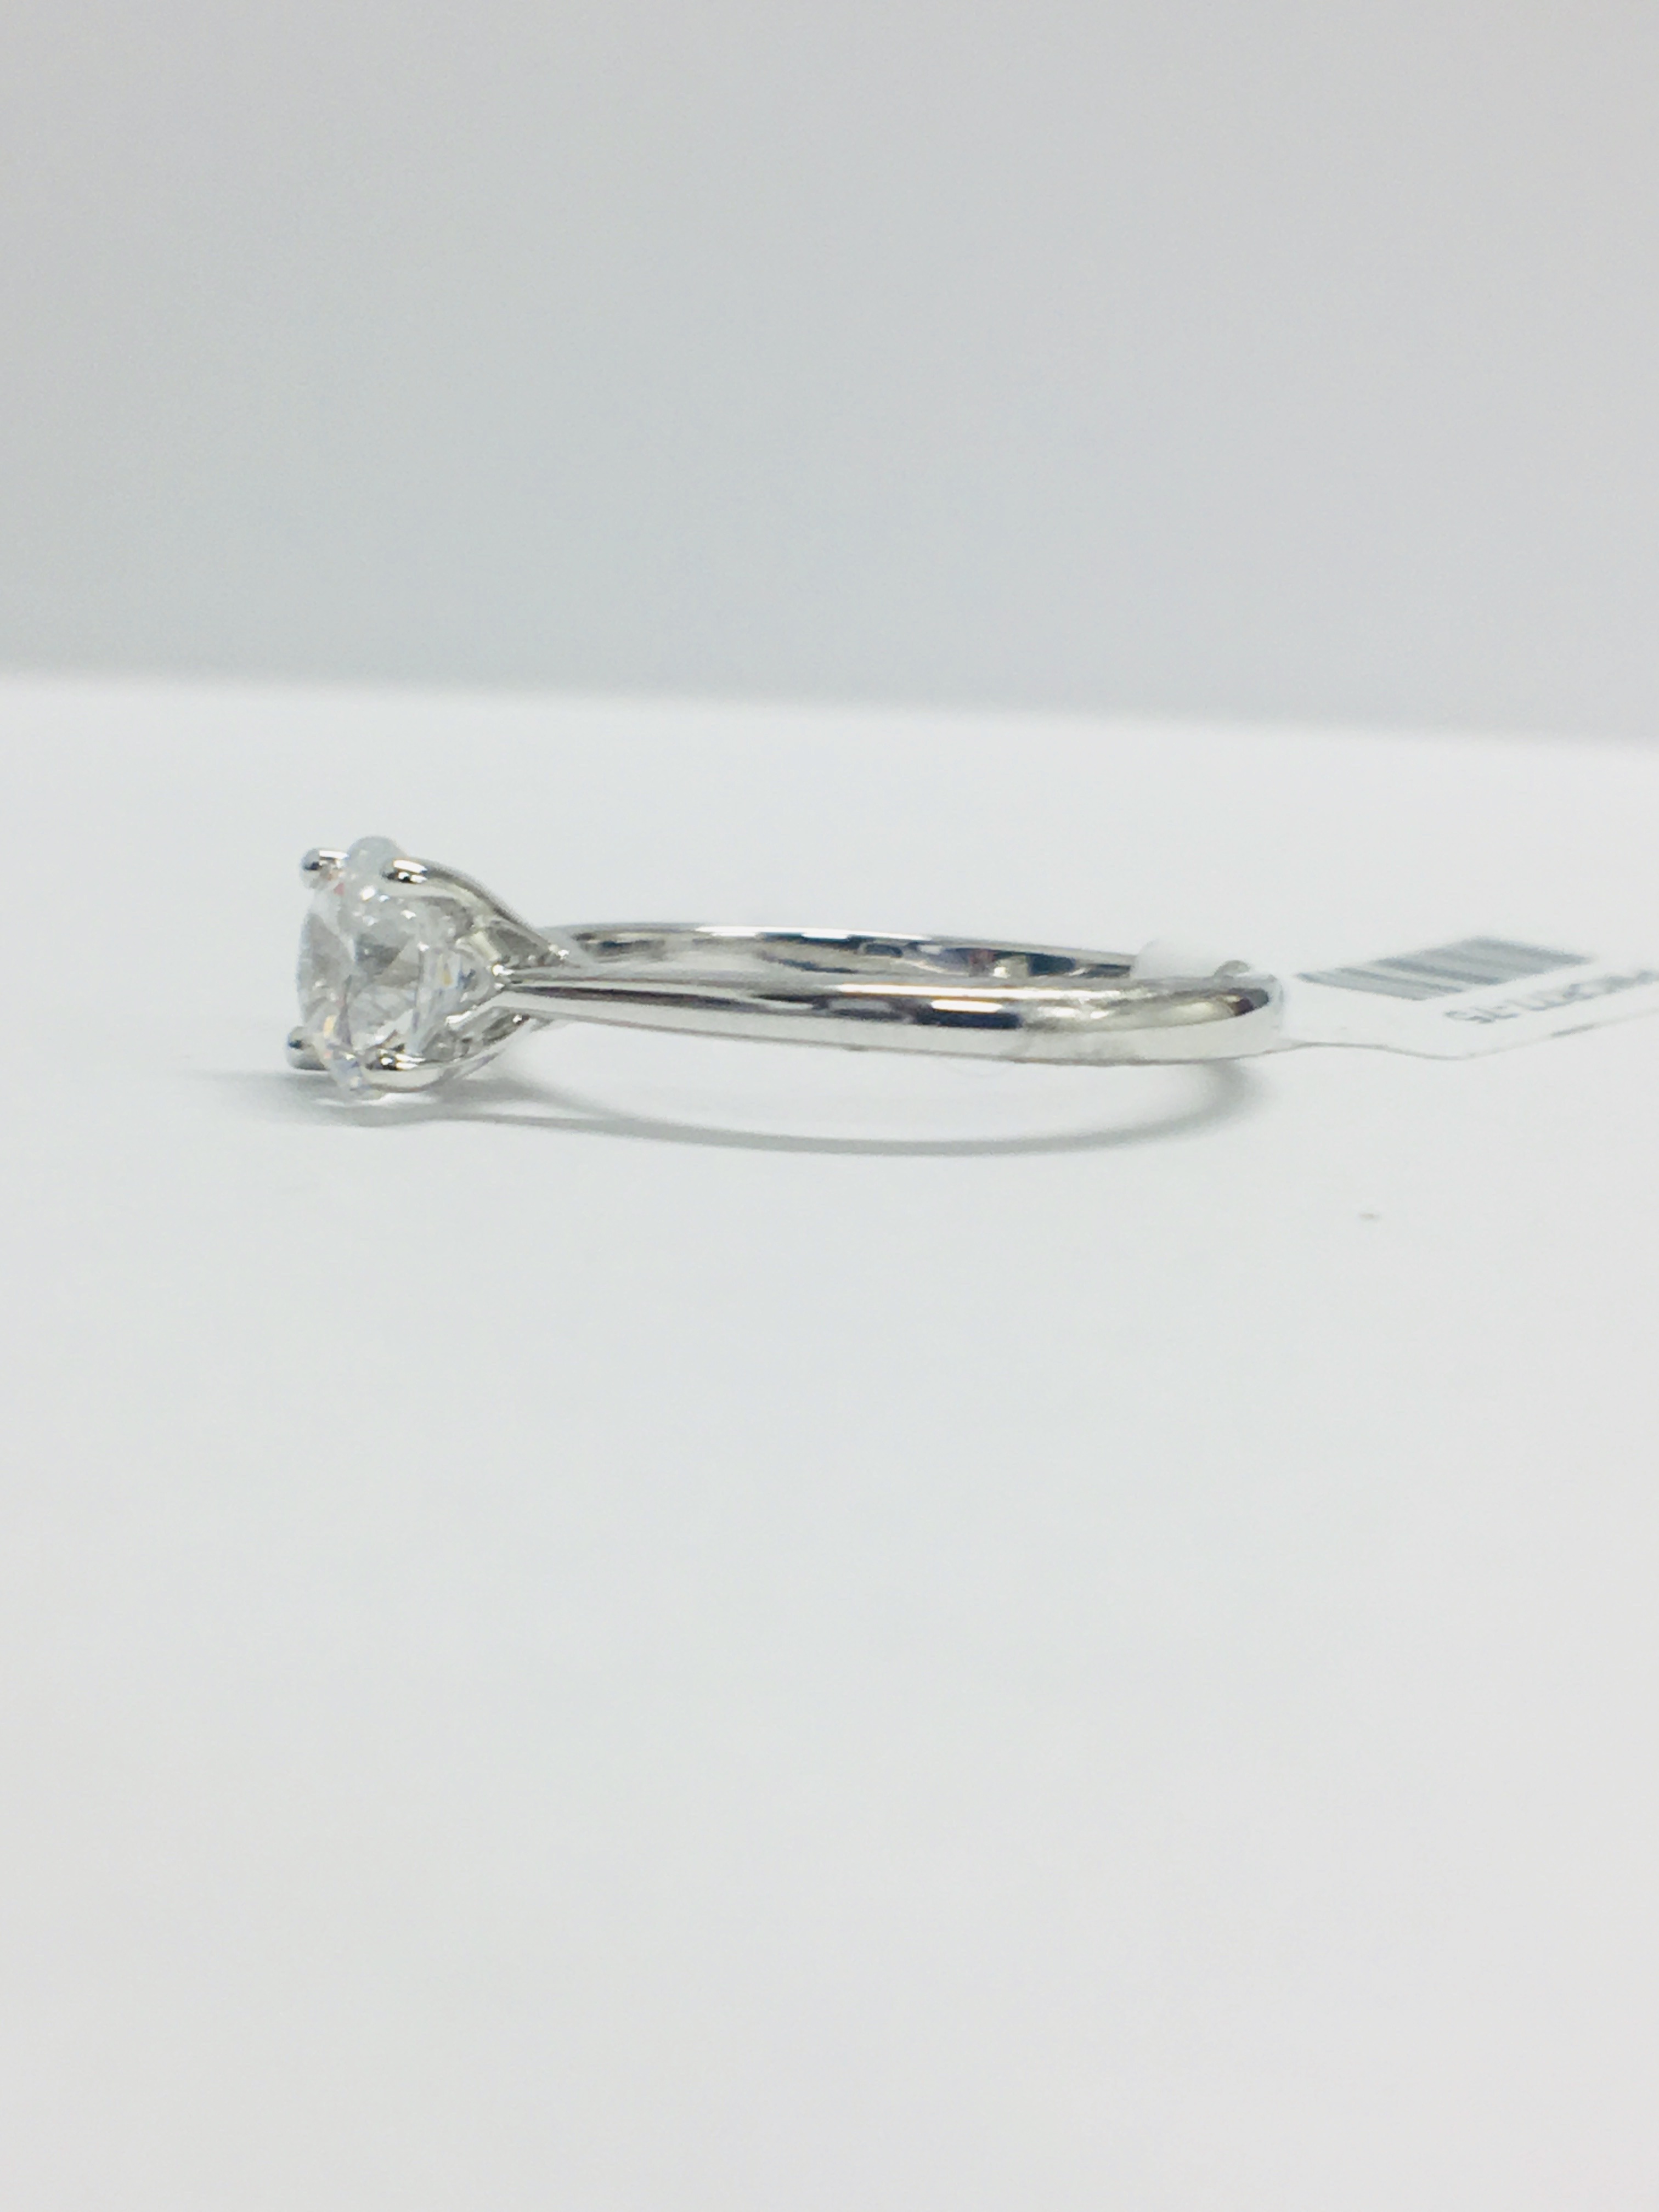 Platinum Solitaire 8 Claw Diamond Ring, - Image 2 of 6